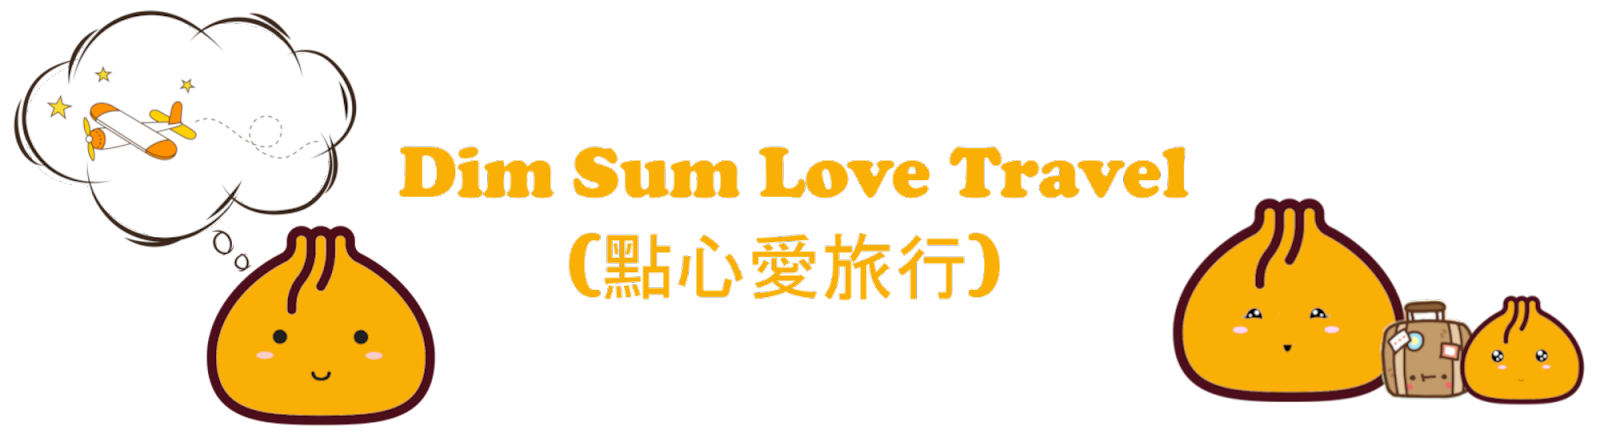 Dim Sum Love Travel (點心愛旅行)